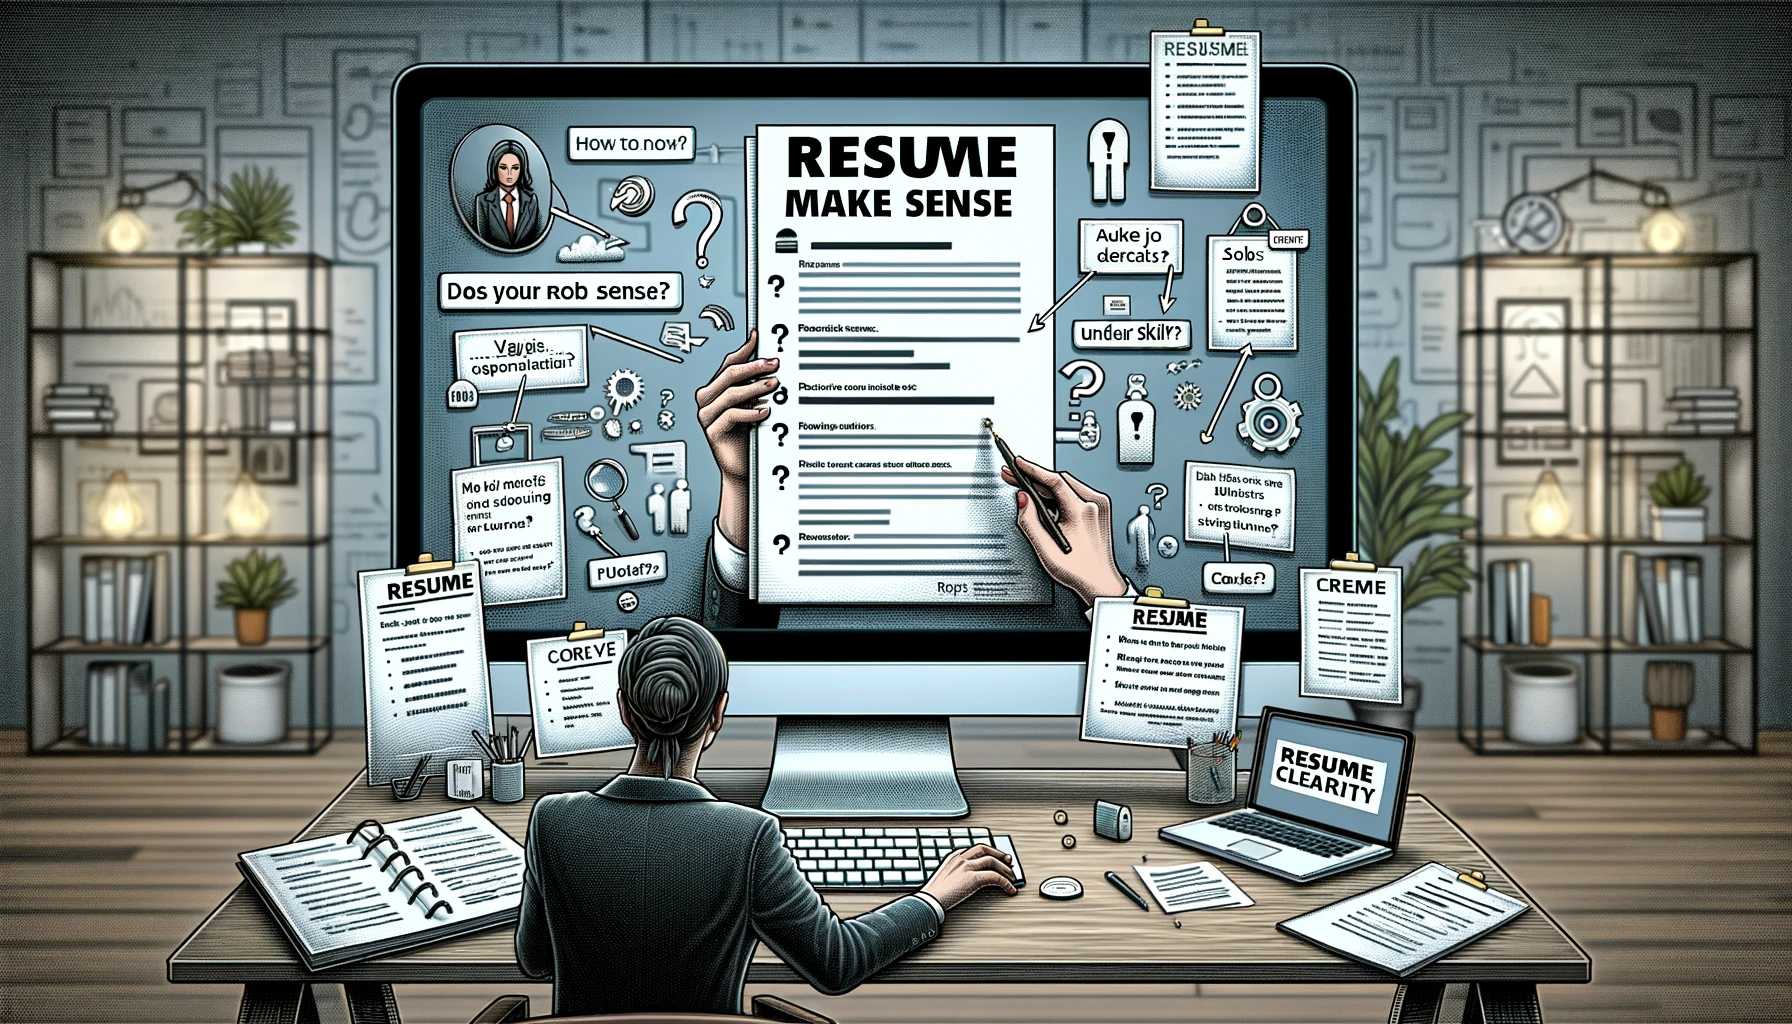 Does Your Resume Make Sense